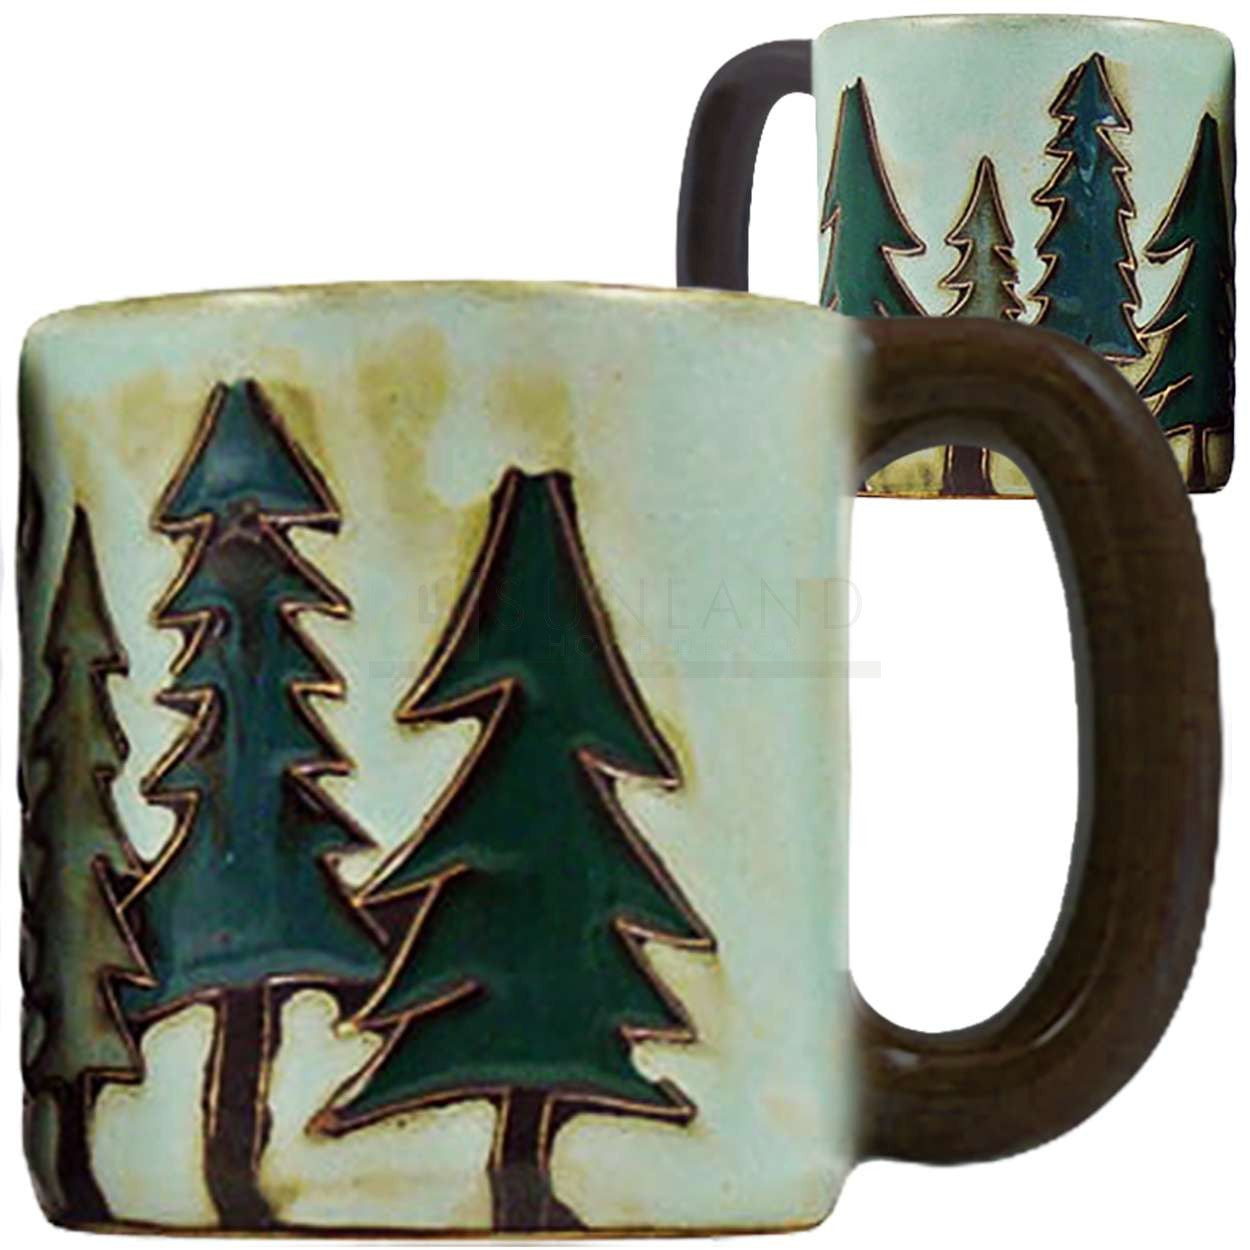 Pine Trees Mug